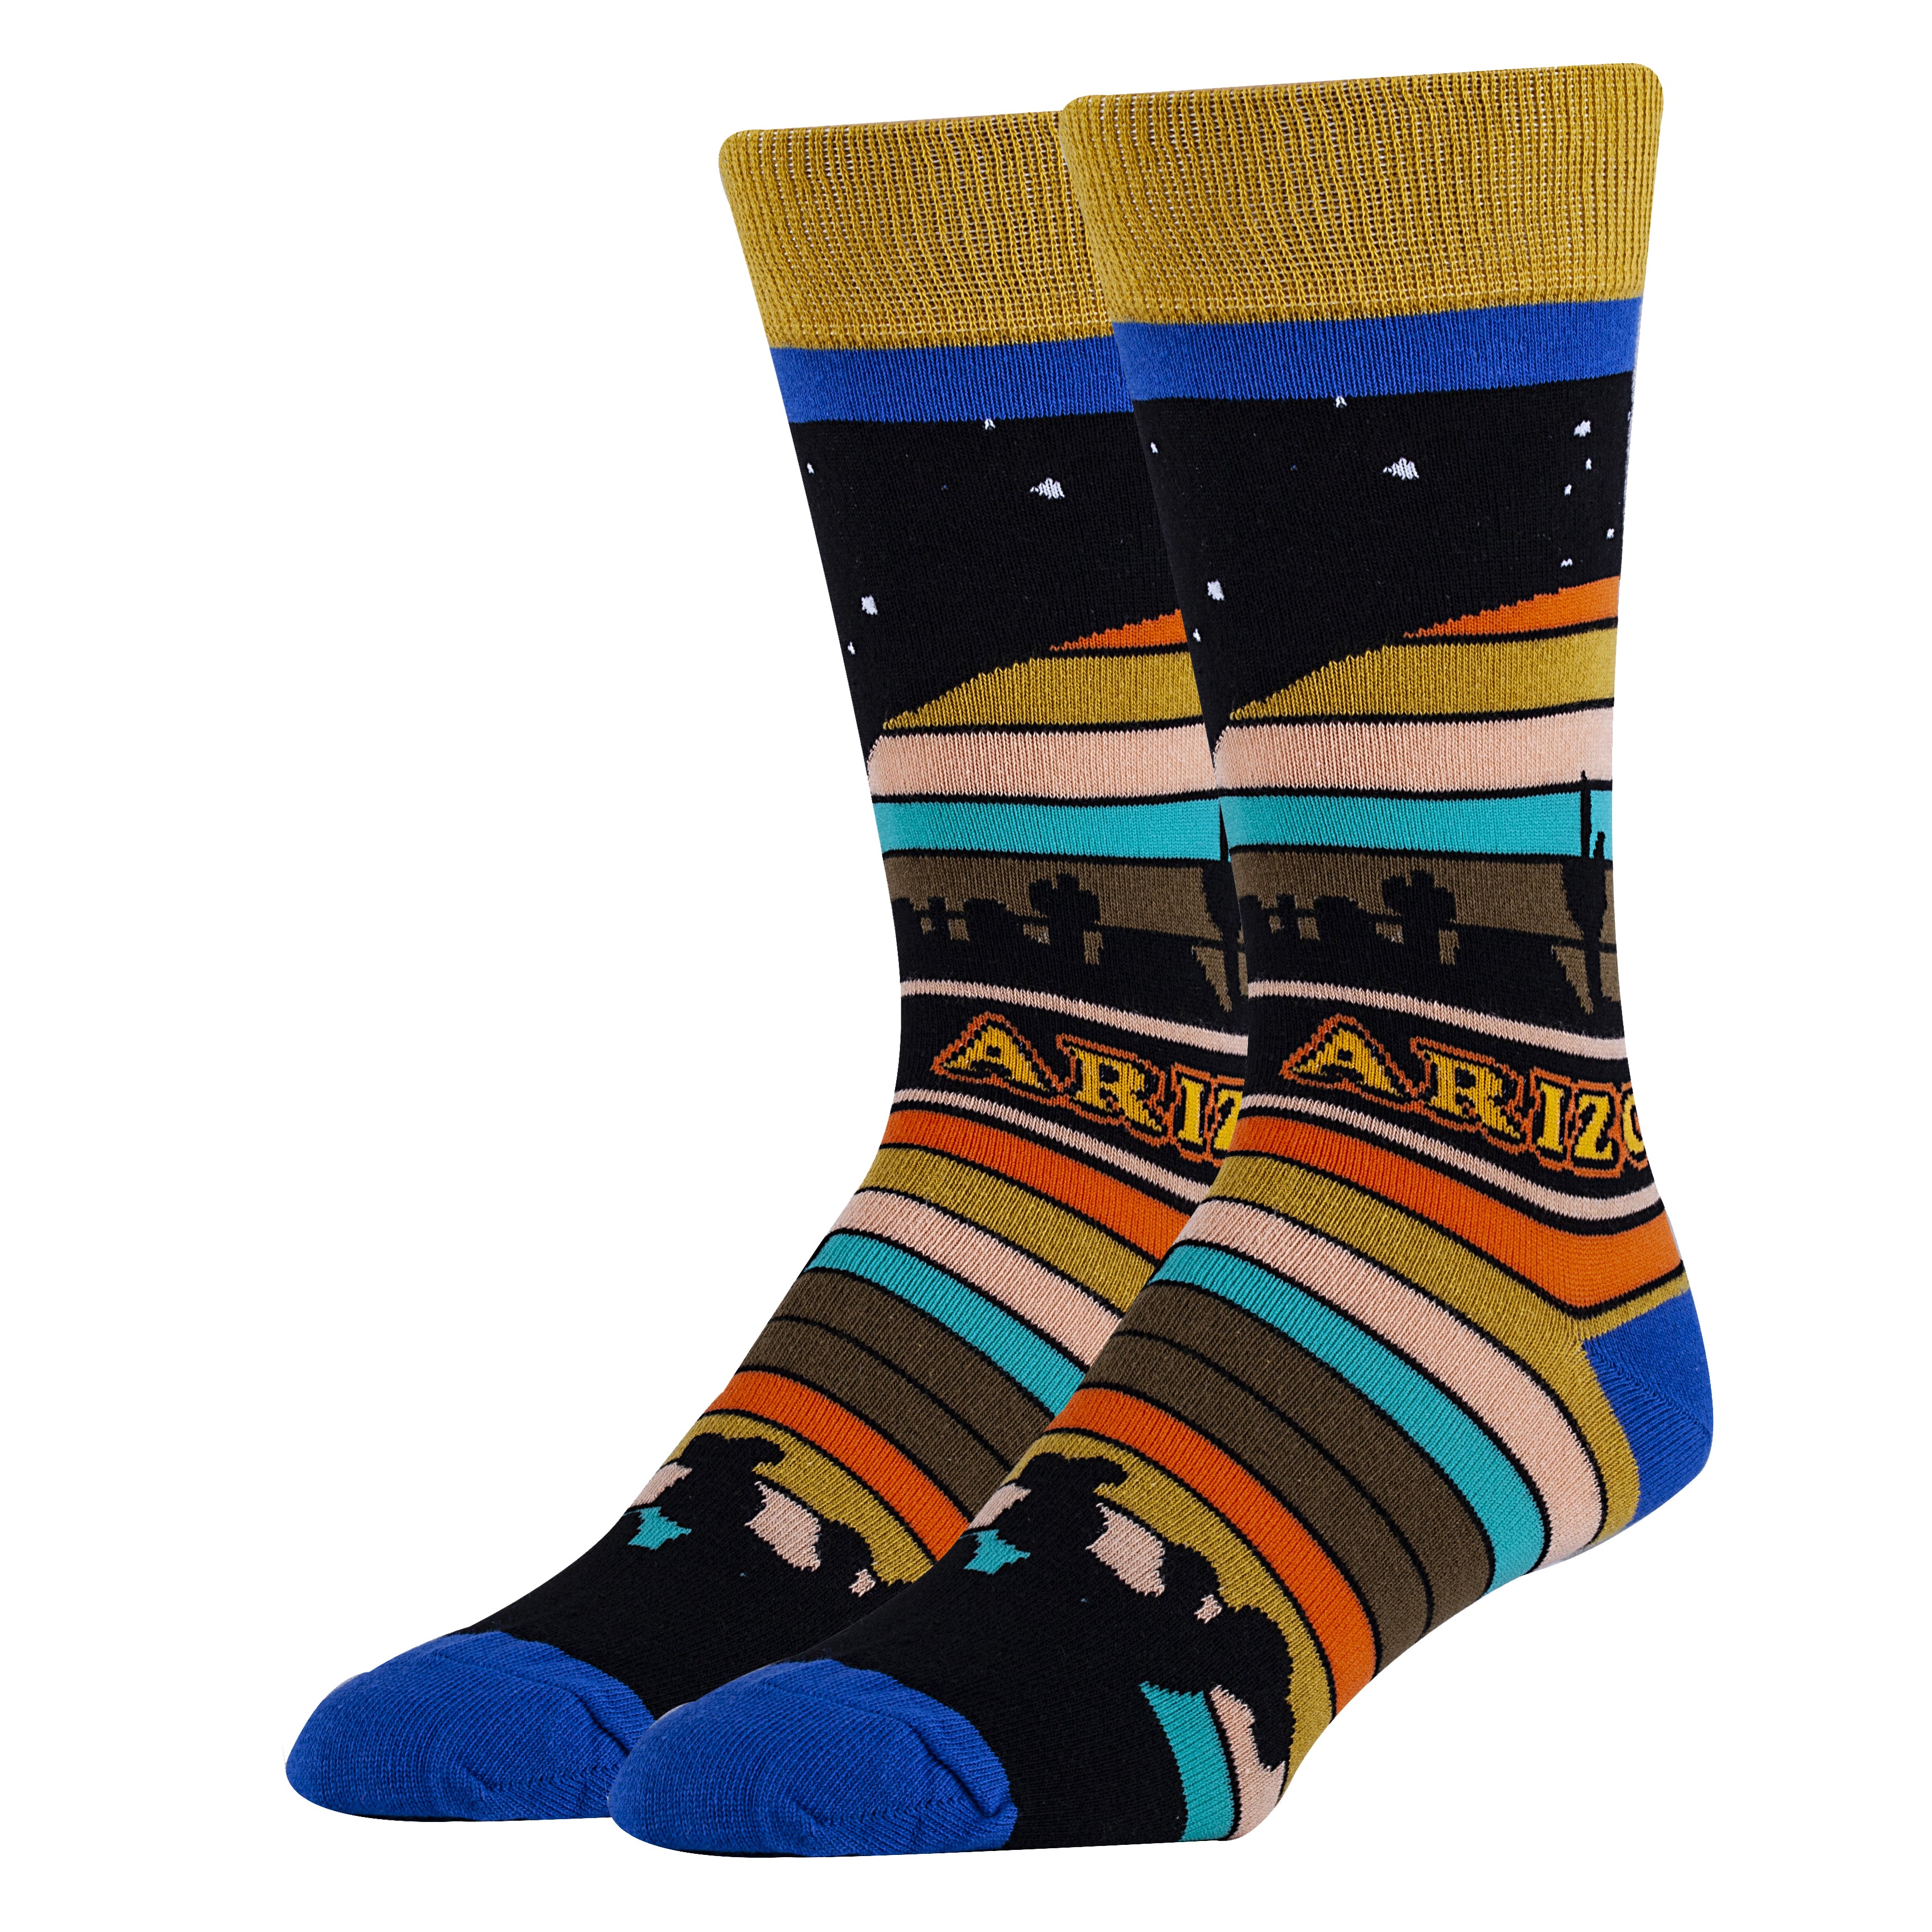 Arizona Socks | Novelty | Oooh Socks For Socks Yeah! Men Crew